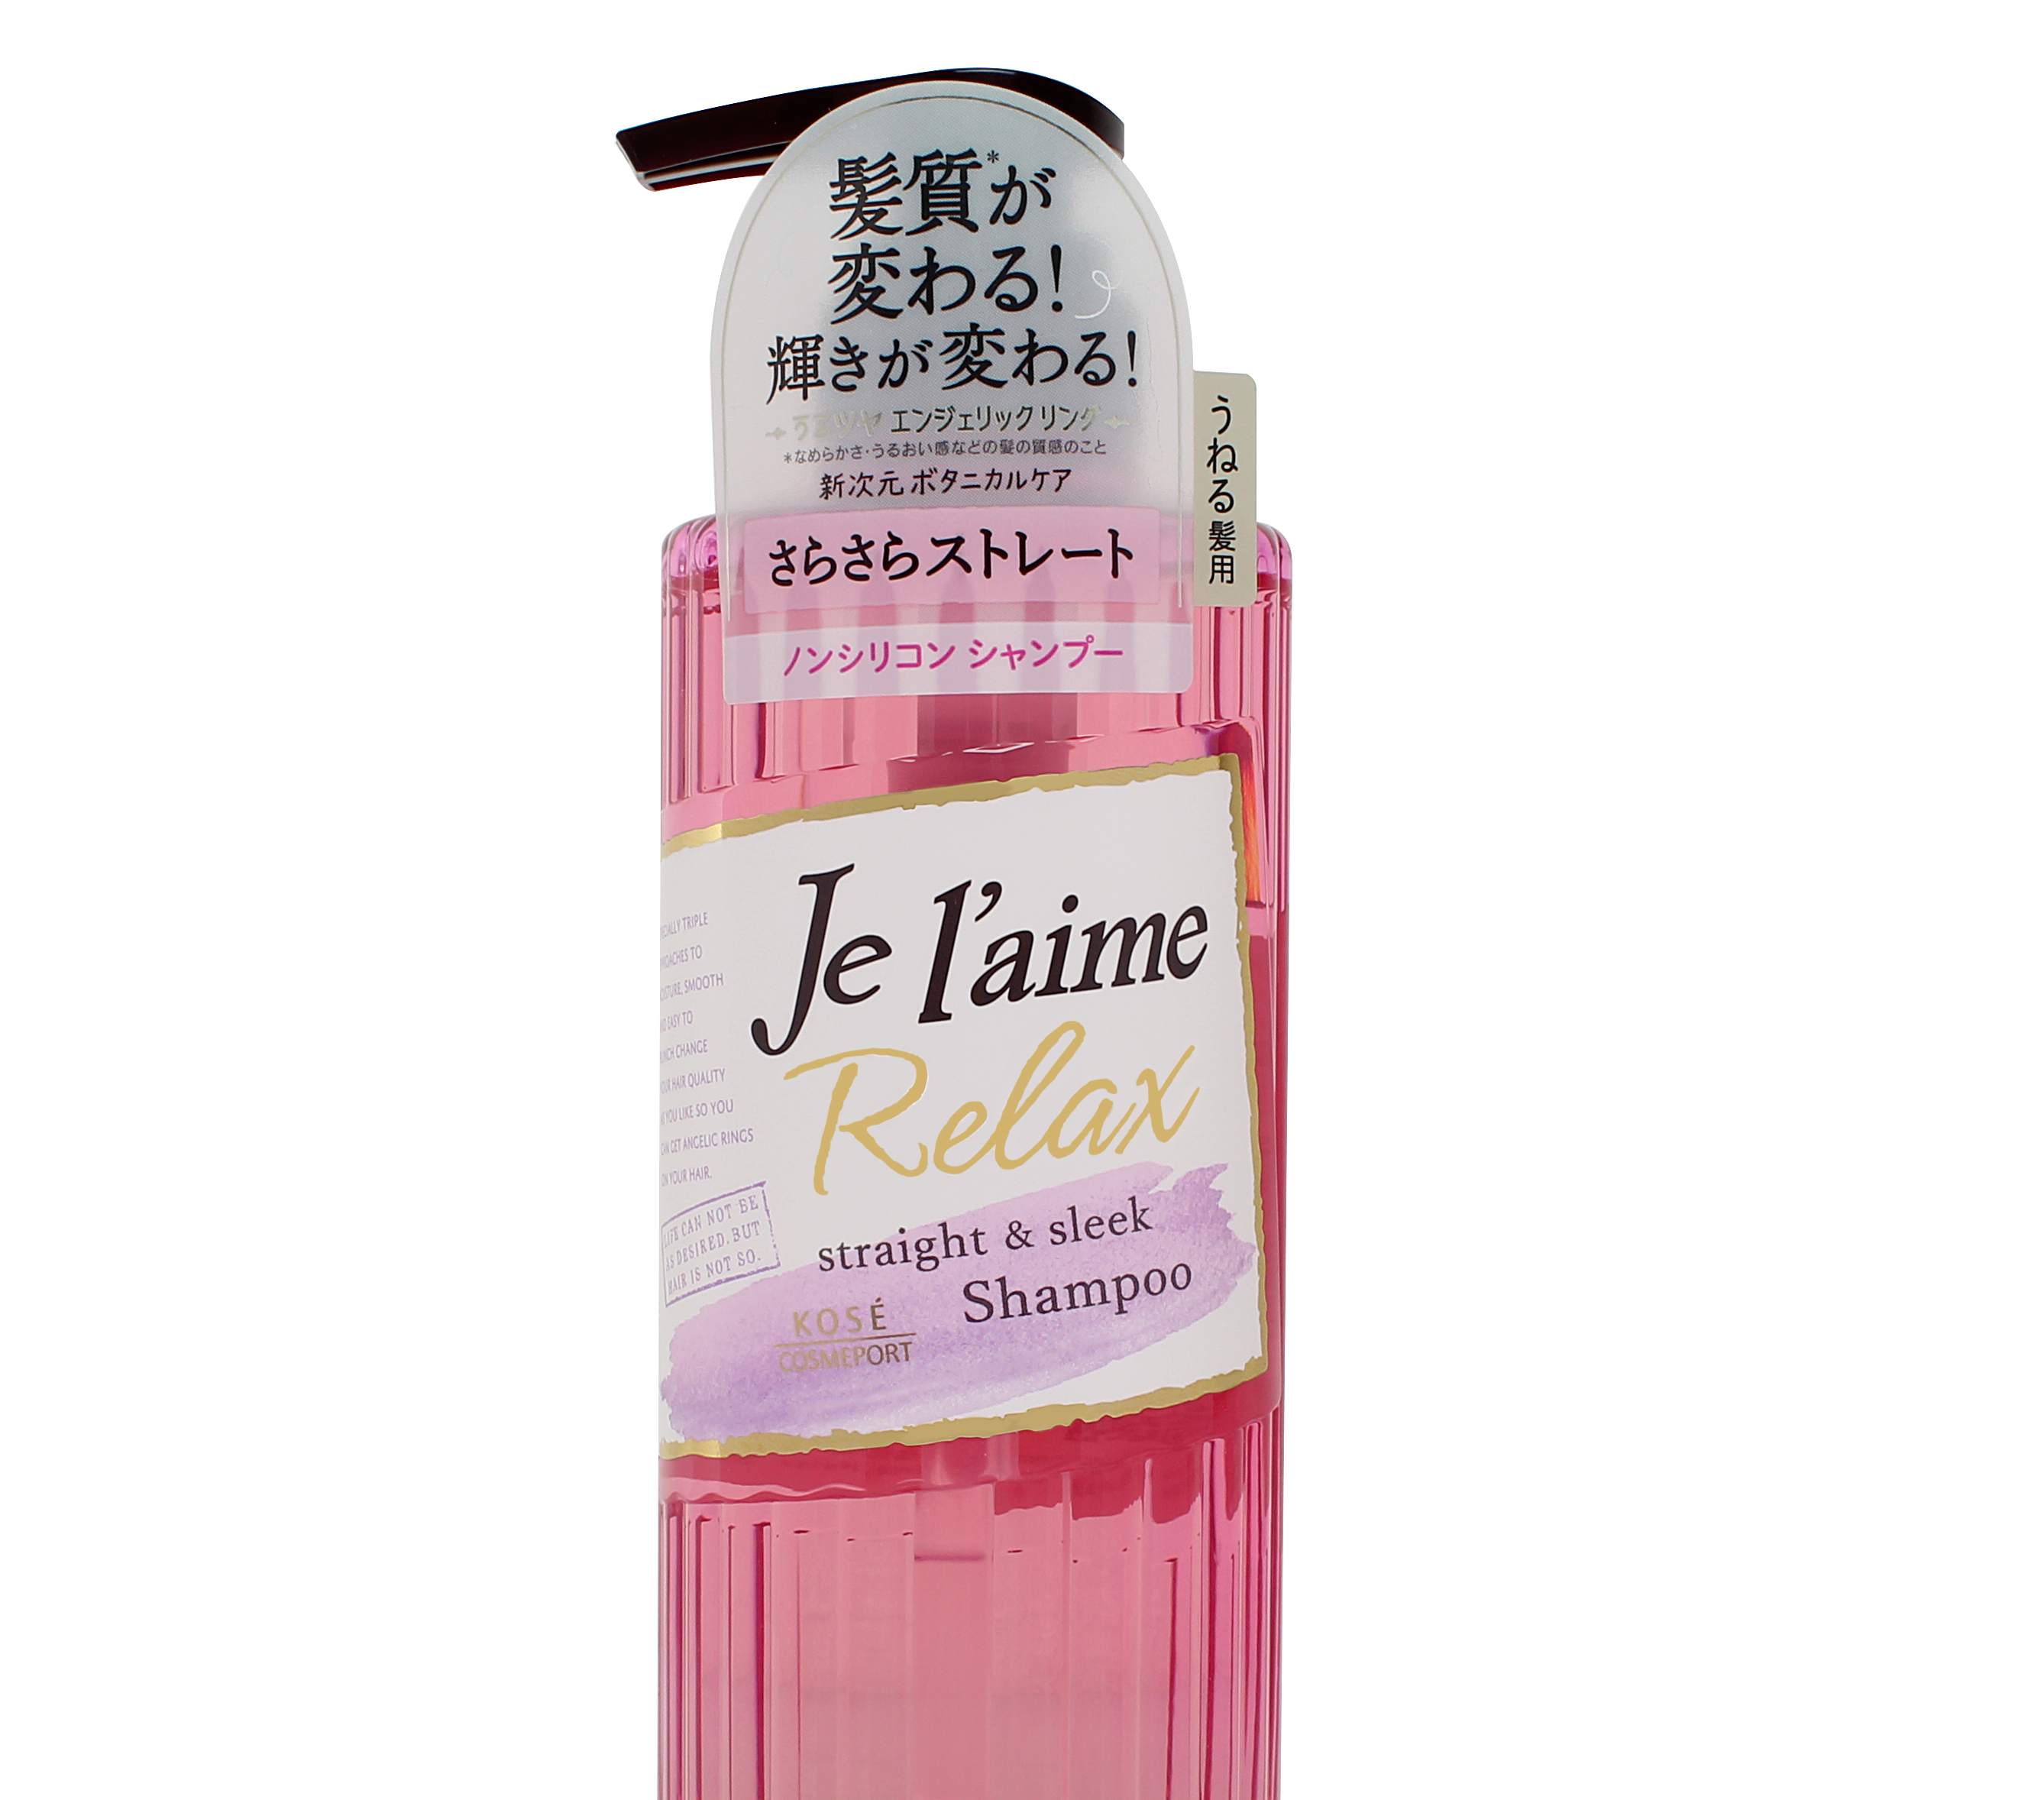 je-laime-relax-new-shampoo-straight-sleek-500-ml-31-1619671156.png